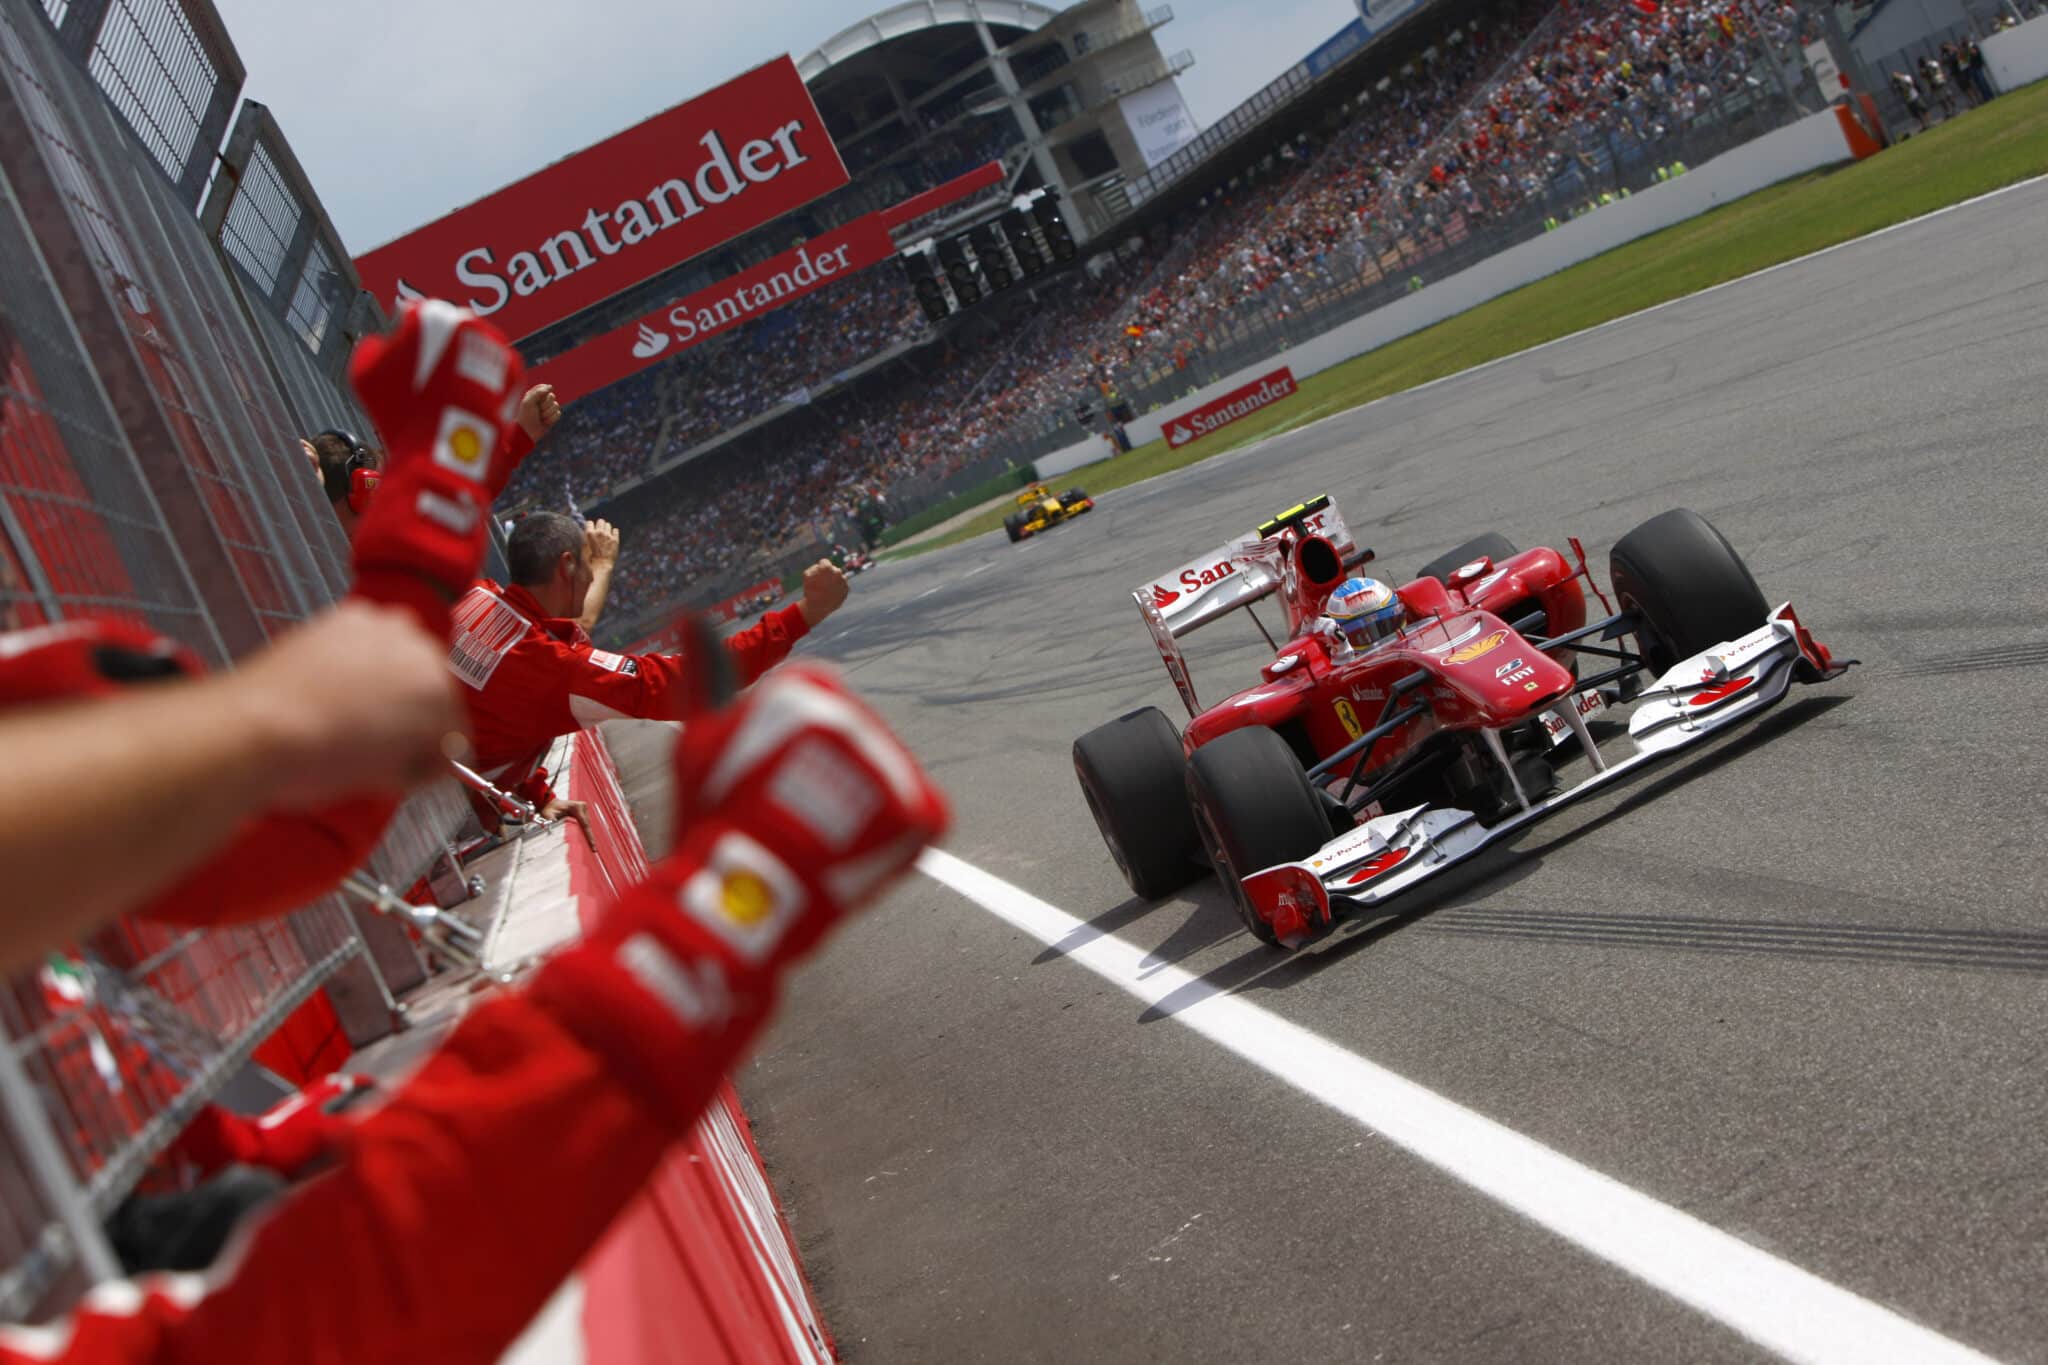 Santander vuelve a la Fórmula 1 con una alianza con Ferrari